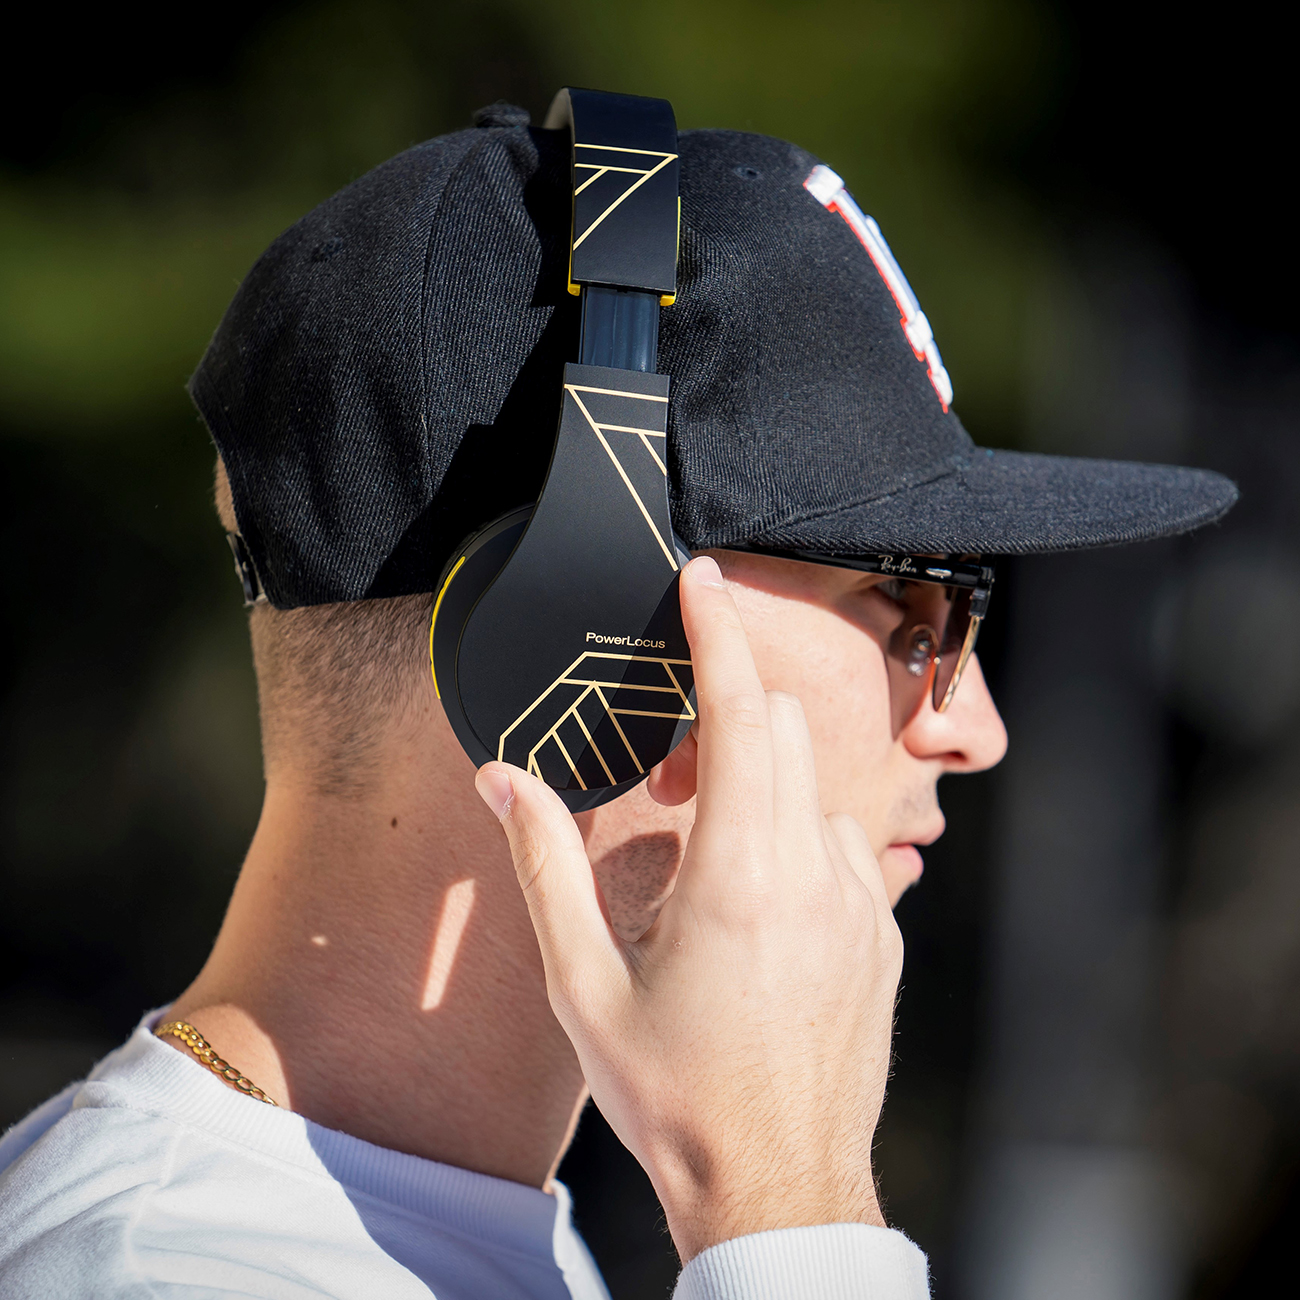 Bluetooth Kopfhörer Schwarz/Gelb POWERLOCUS P2, Over-ear